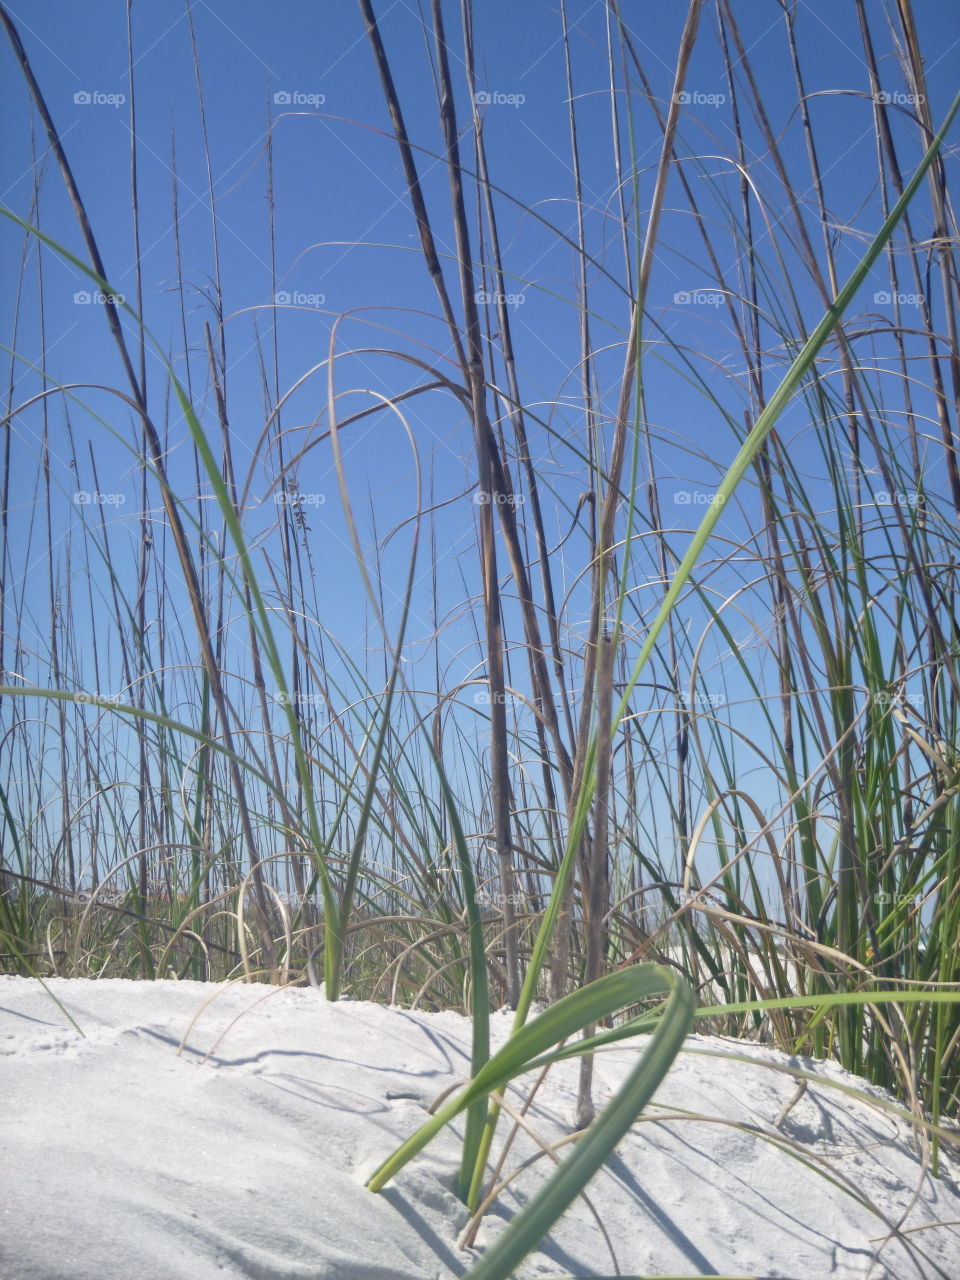 peeking through. Sandy beach grass